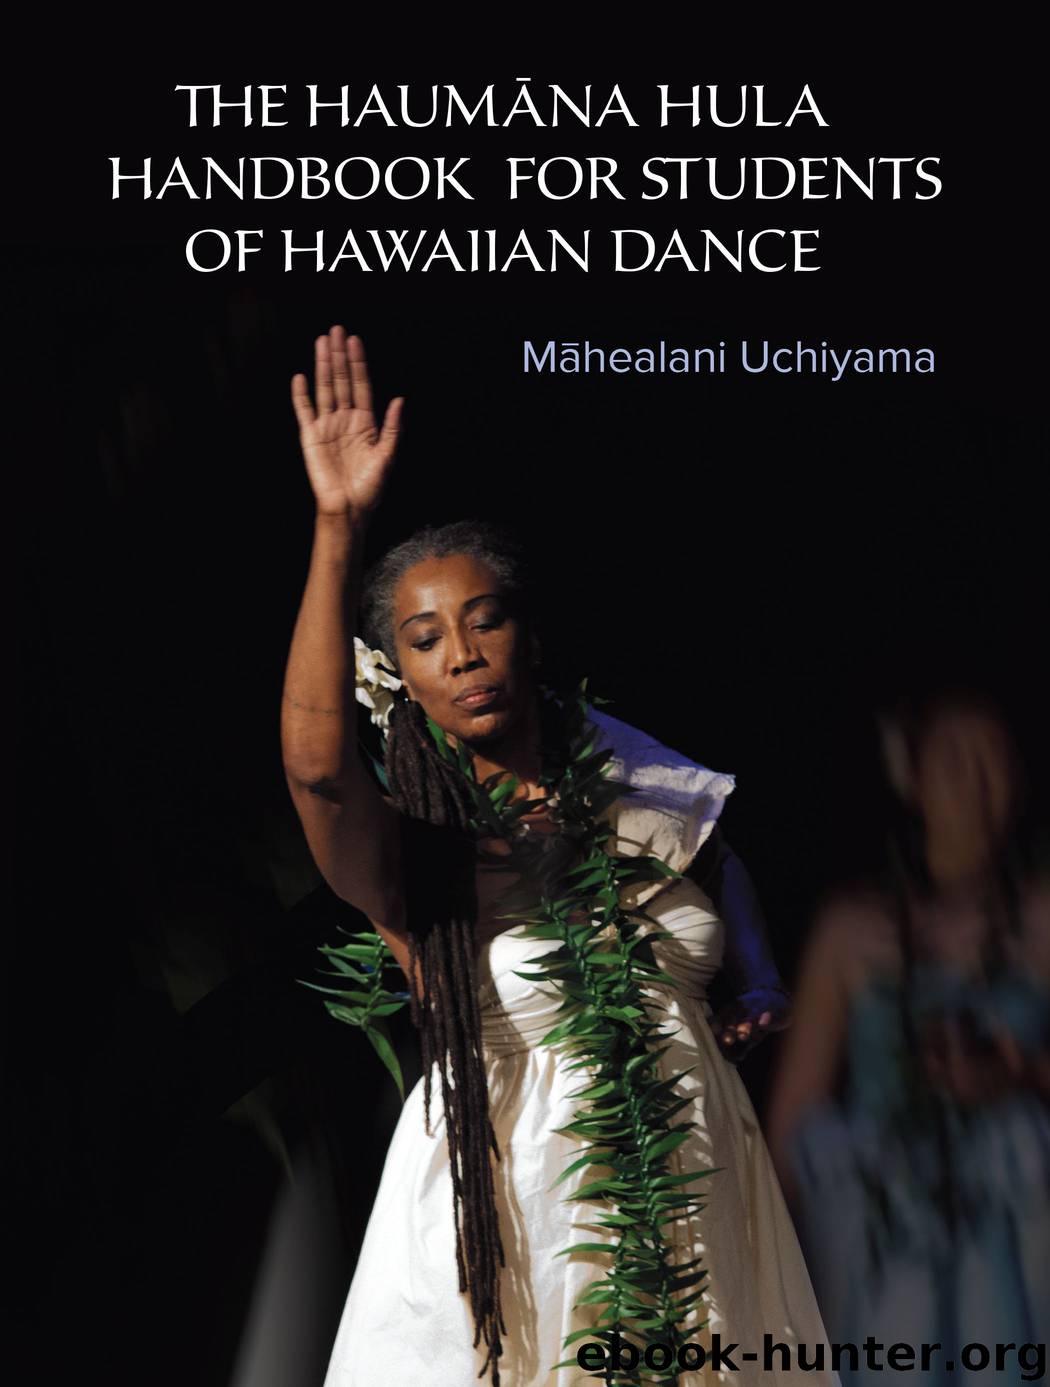 The Haumana Hula Handbook for Students of Hawaiian Dance by Mahealani Uchiyama